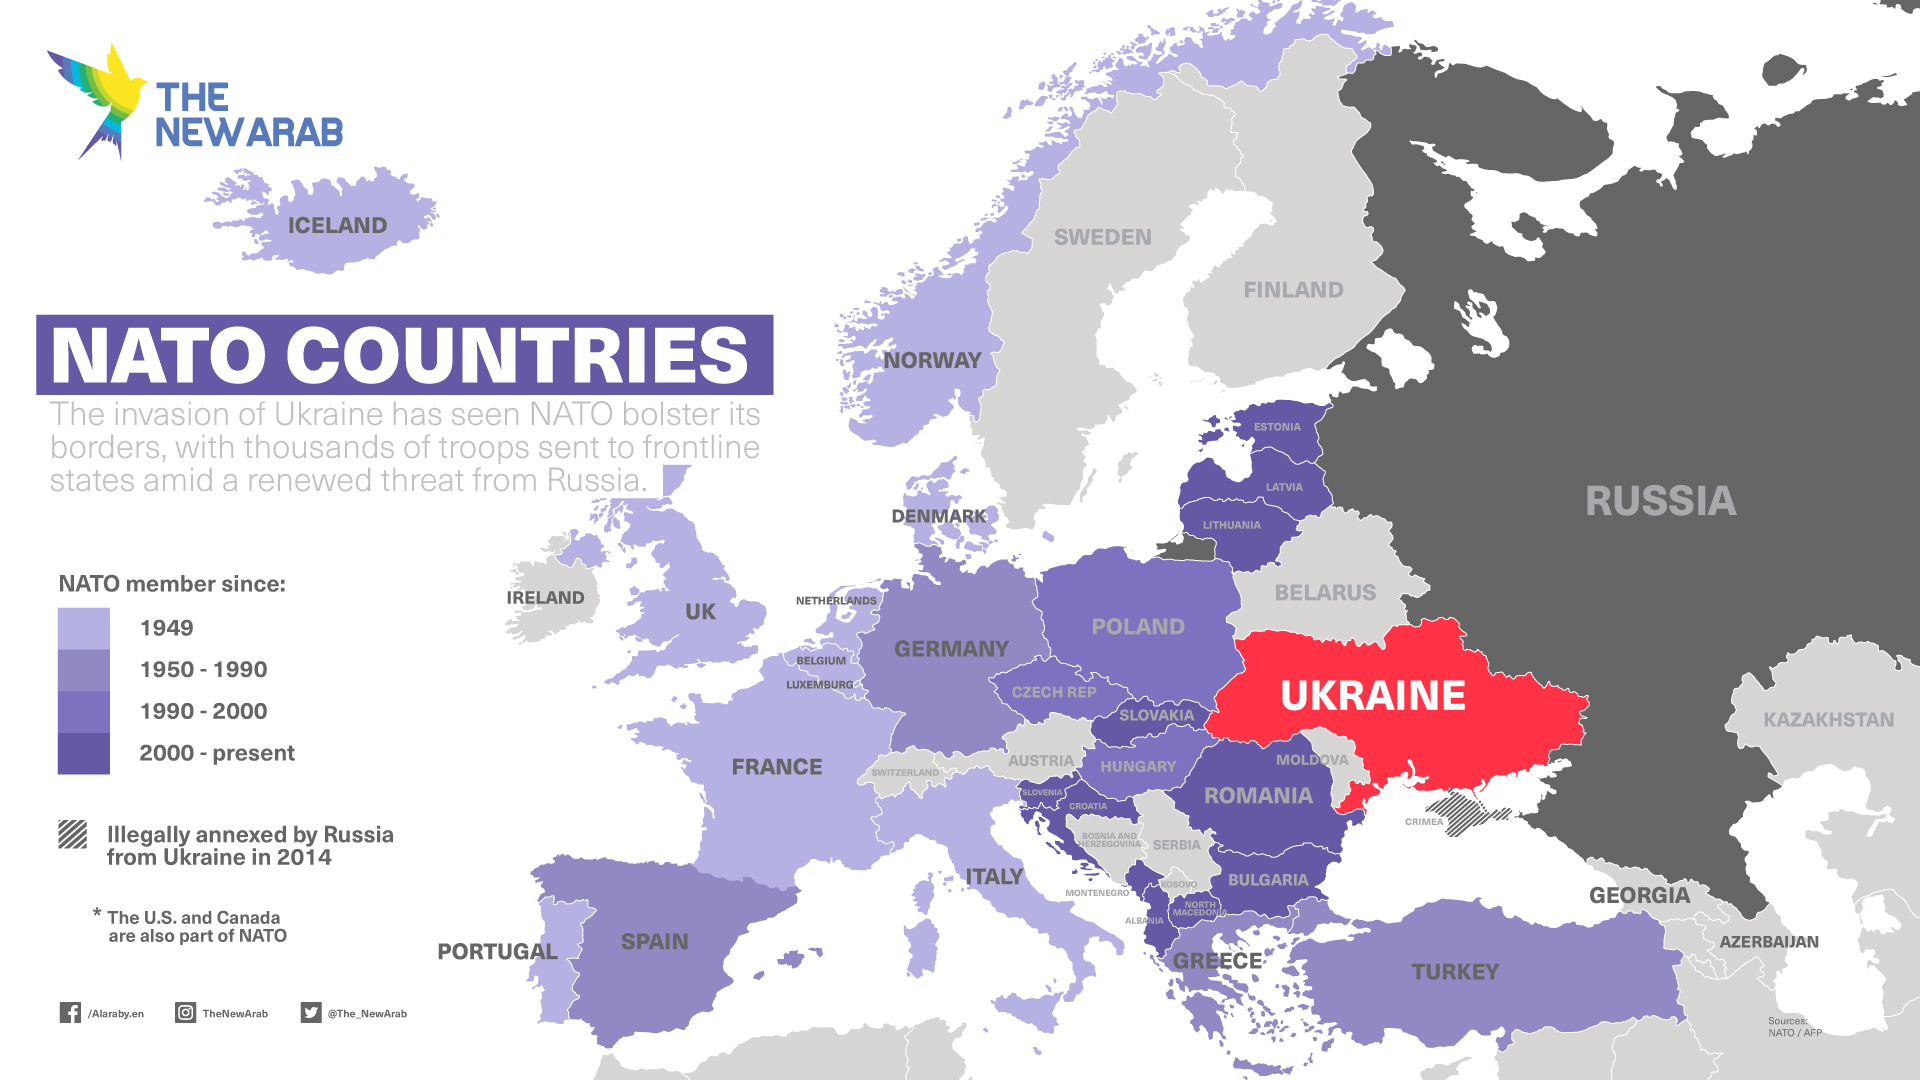 infographic-Nato-Countries.jpg